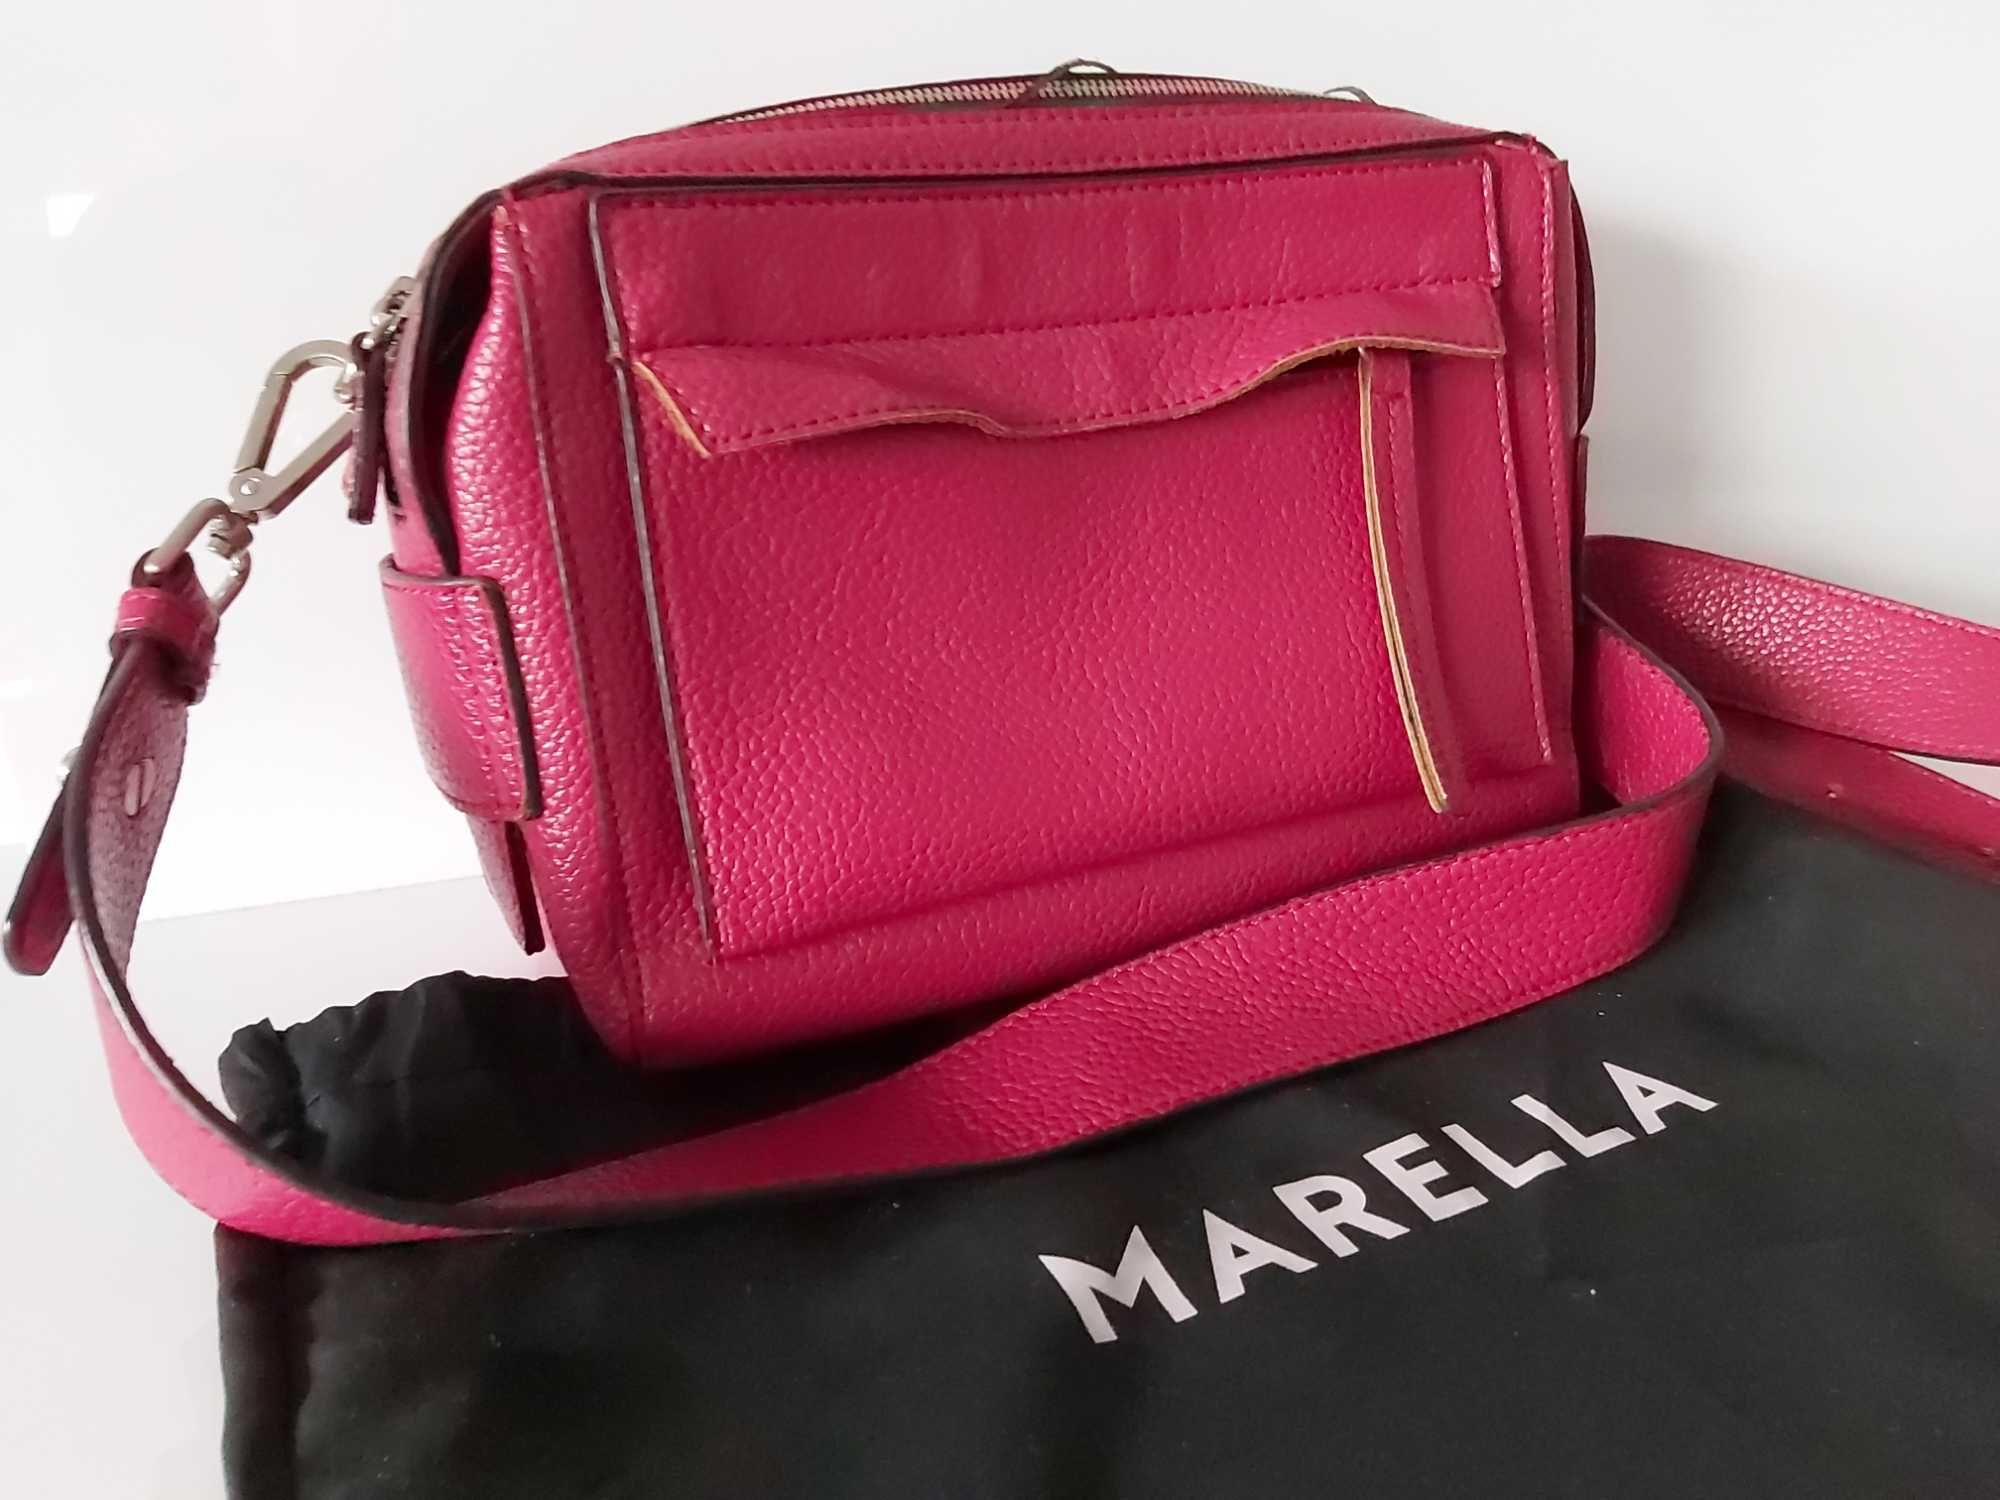 Ekskluzywna torebka czerwona MARELLA listonoszka torba